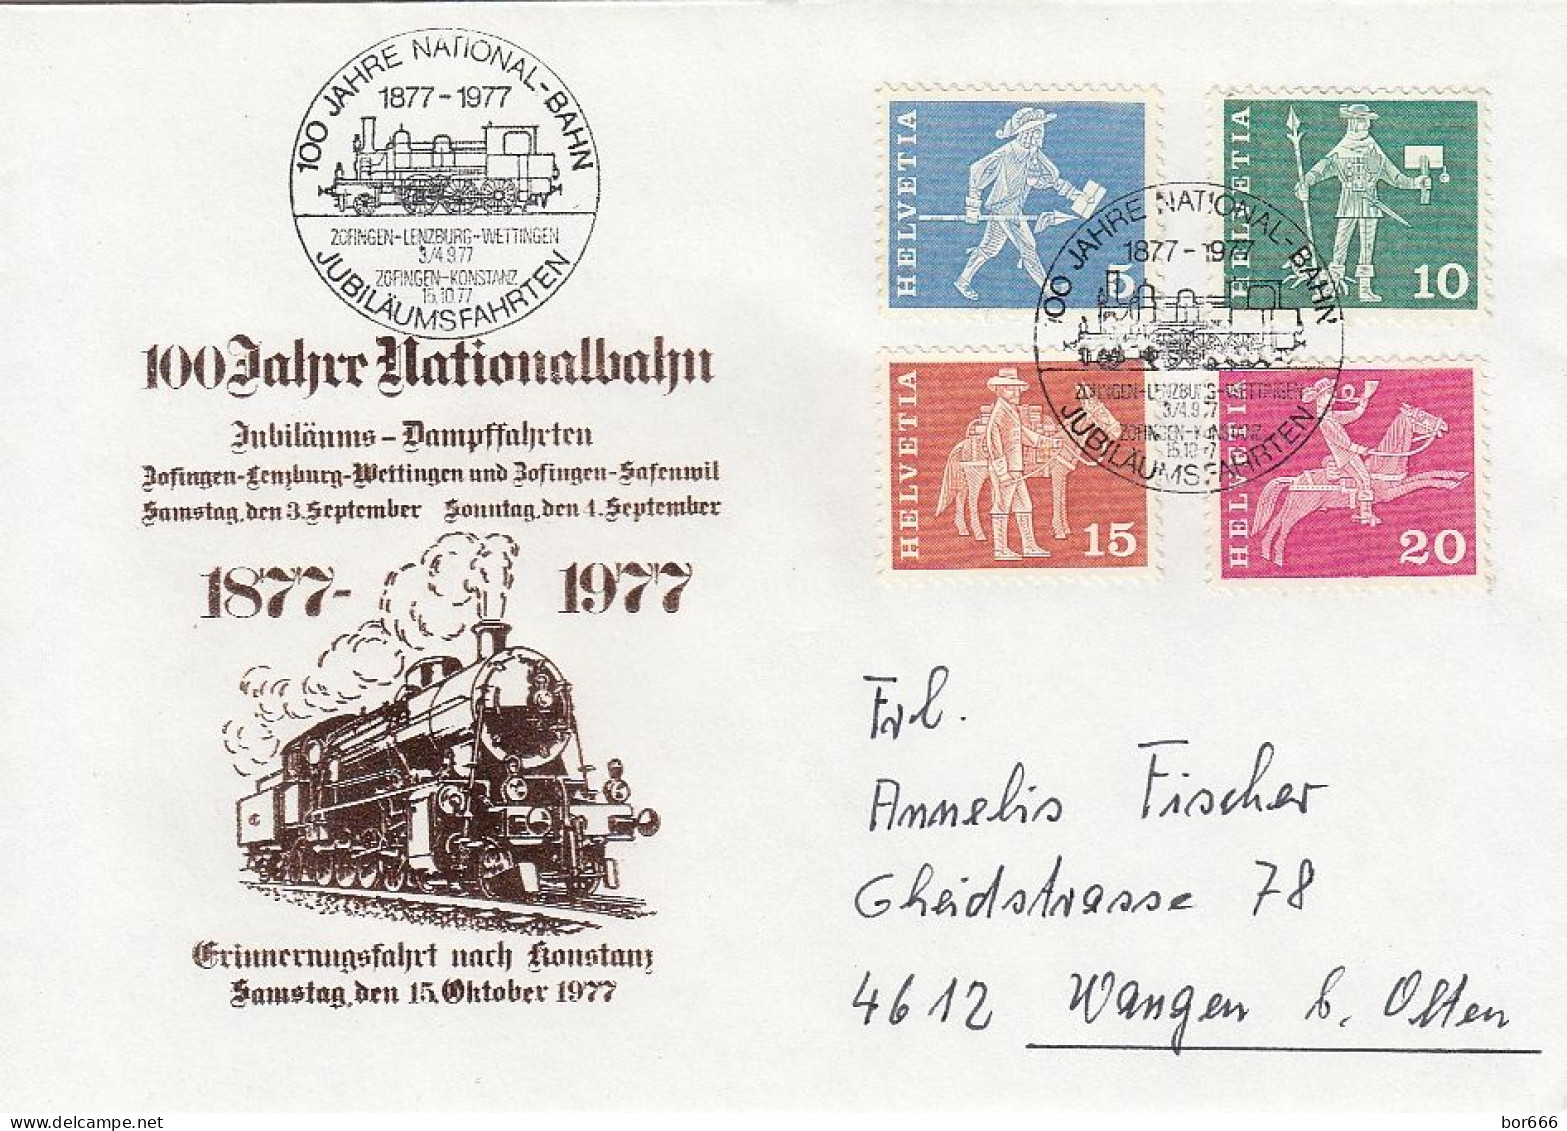 GOOD SWITZERLAND Special Stamped Cover 1977 - Railway / Nationalbahn 100 - Railway